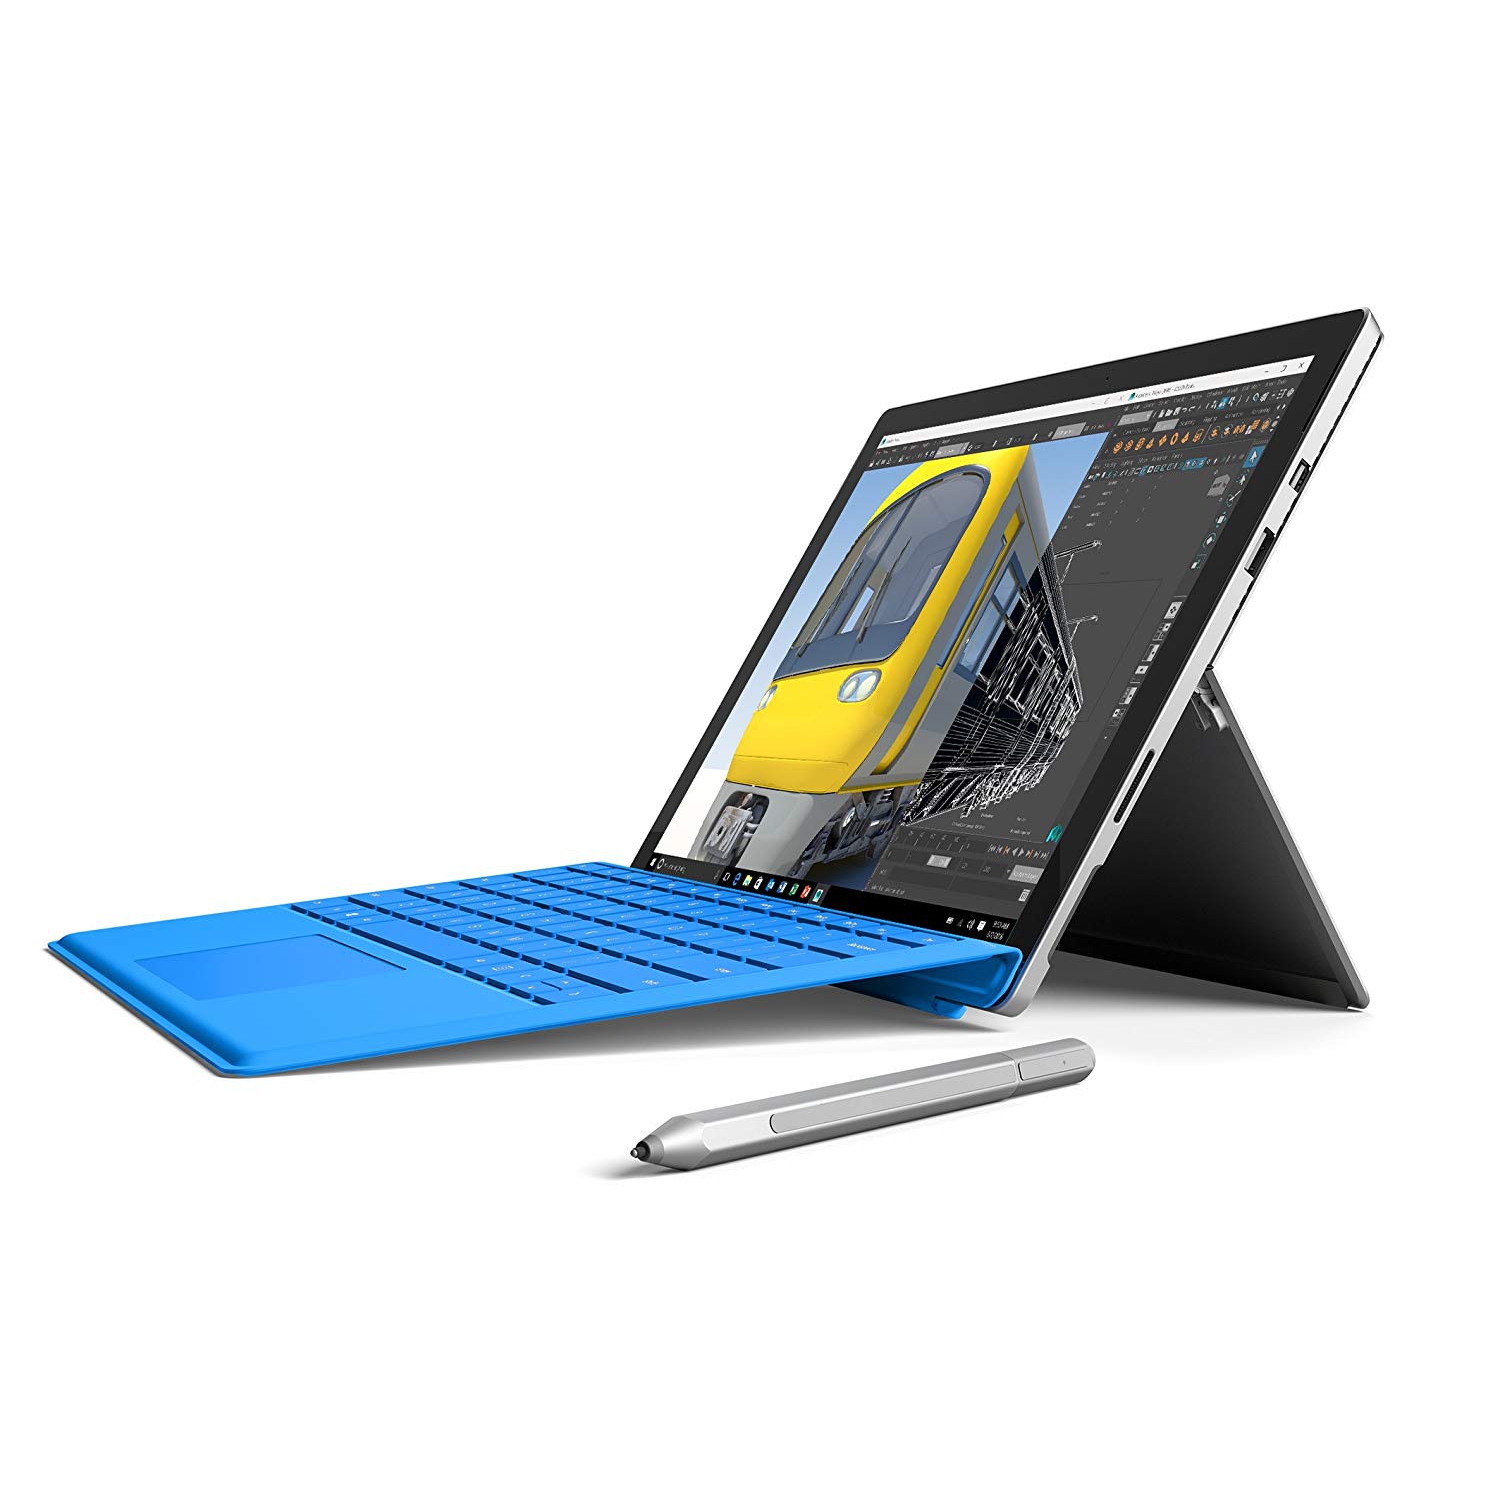 Refurbished (Good) - Microsoft Surface Pro 4 12.3" Intel Core i5-6300U 8GB RAM 256GB SSD Wins 10 Pro - + Keyboard